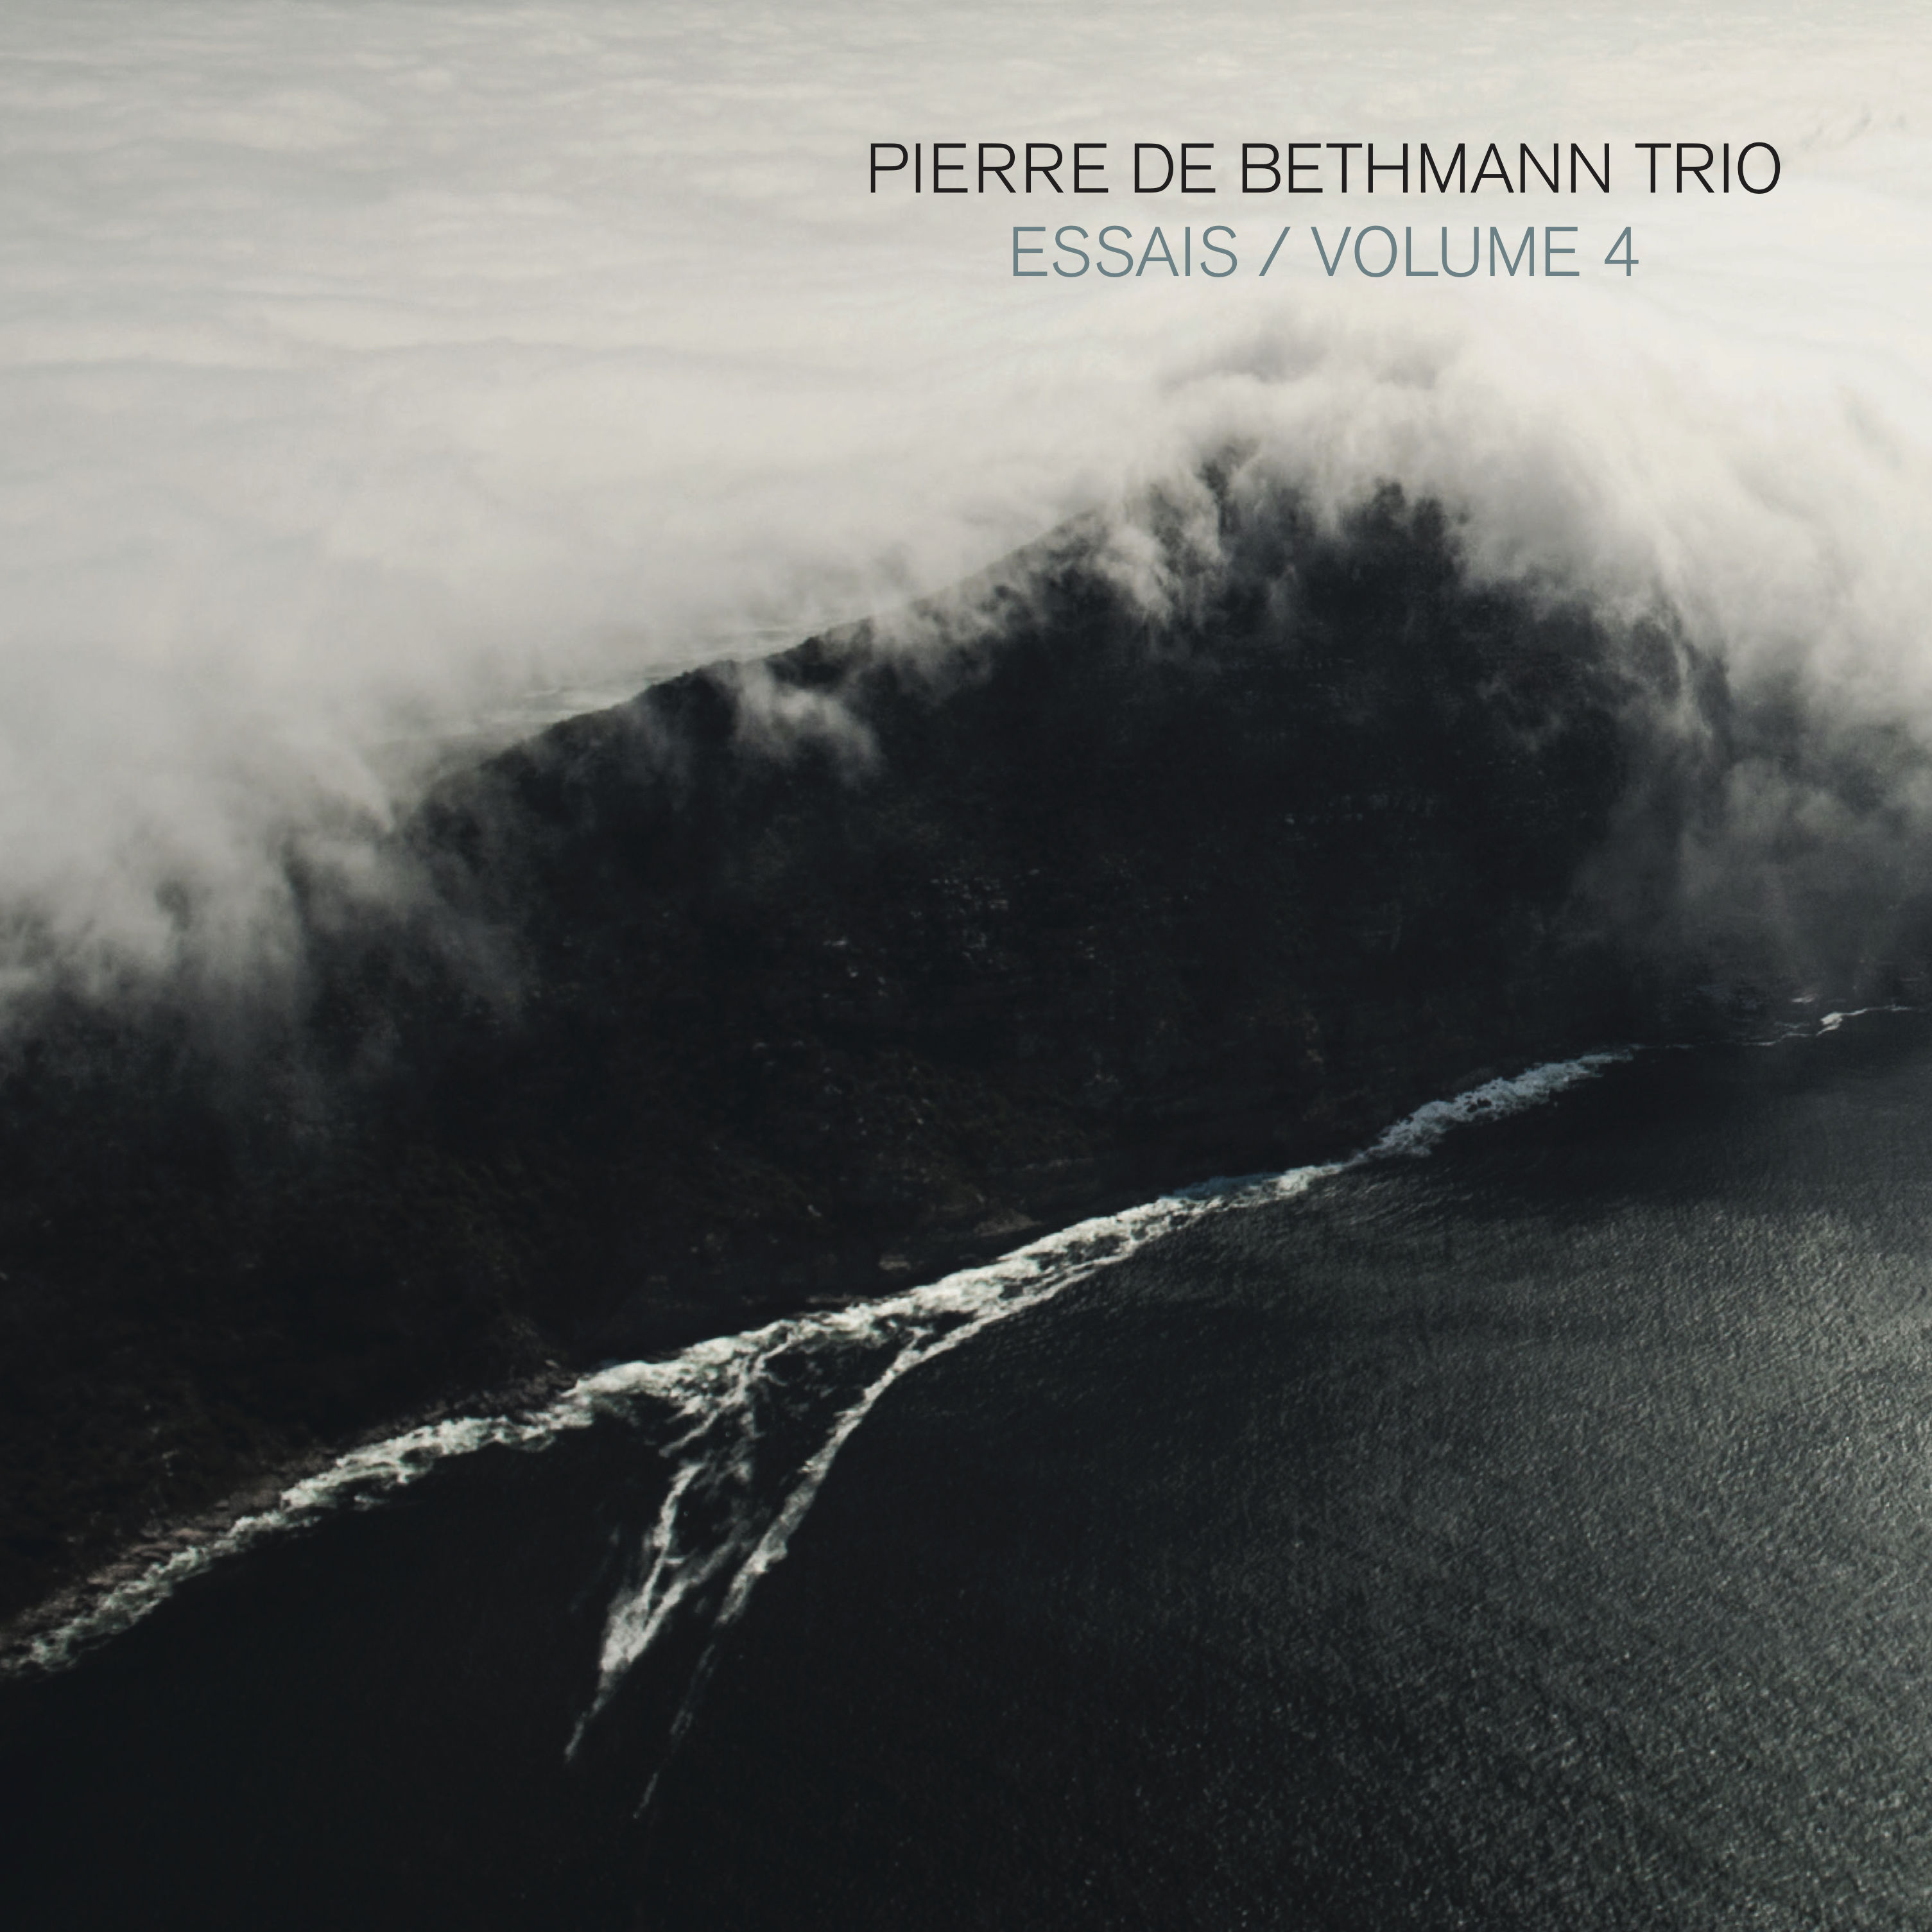 Pierre de Bethmann Trio - Essais, Volume 4 (2020) [FLAC 24bit/96kHz]